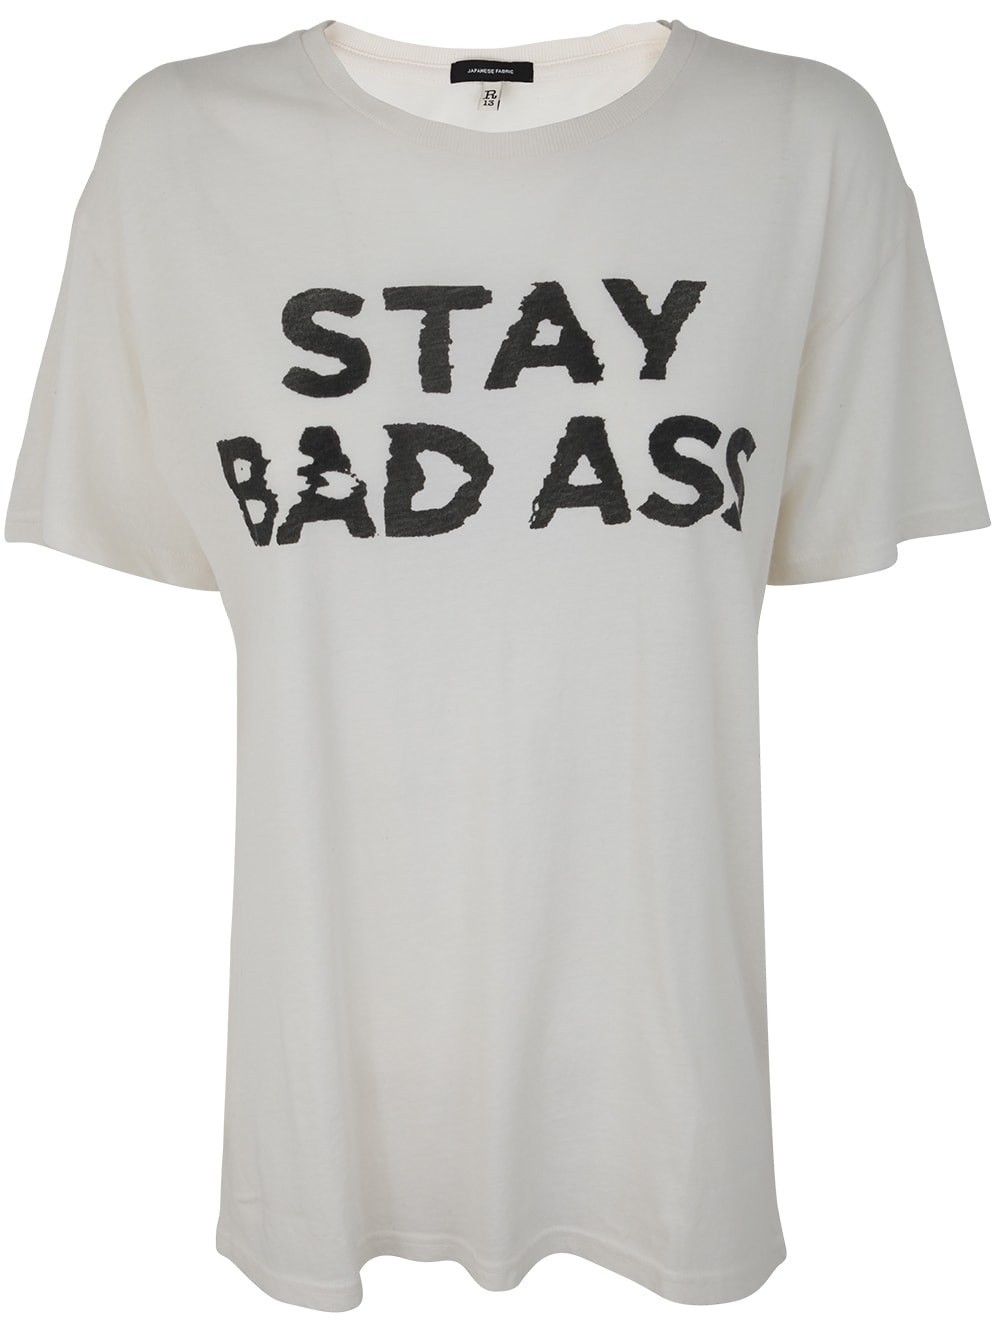 Stay Badass Boy T-shirt